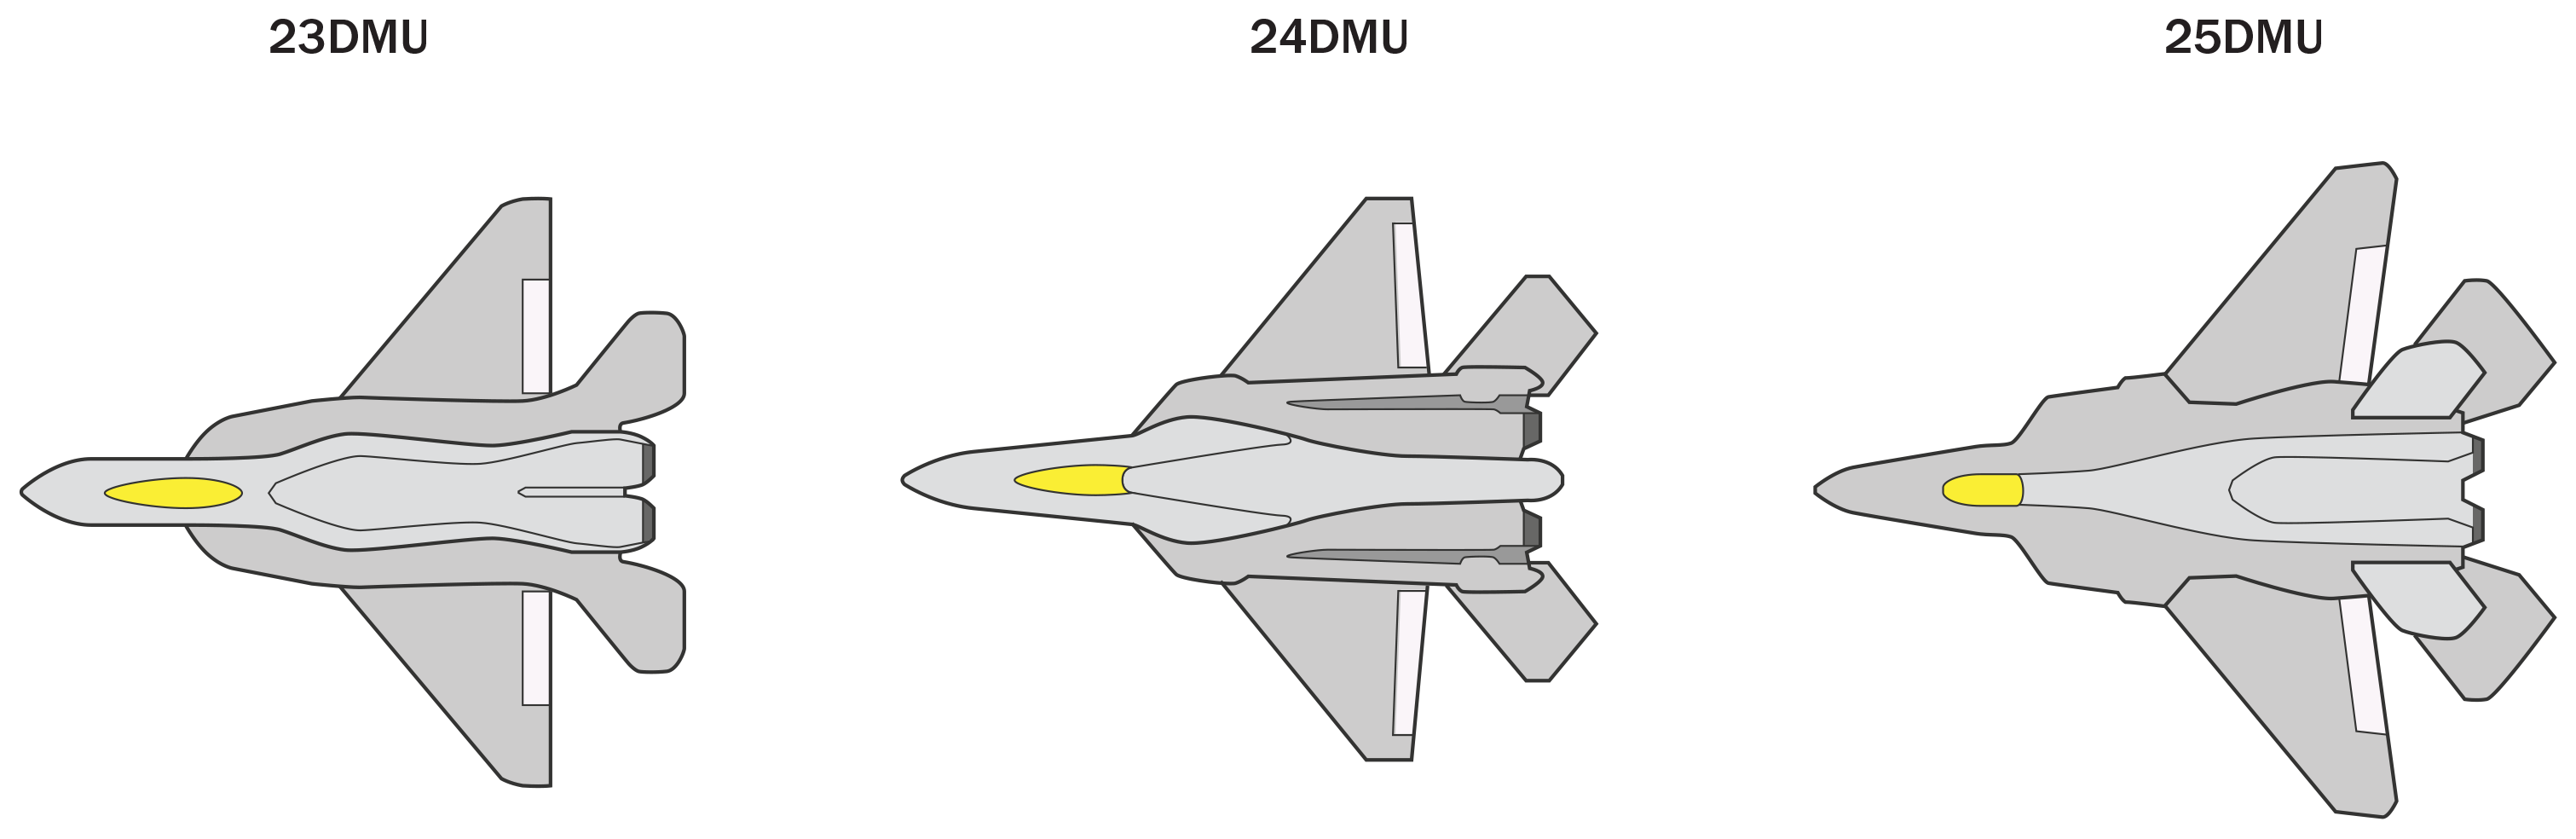 F-3設計の変遷